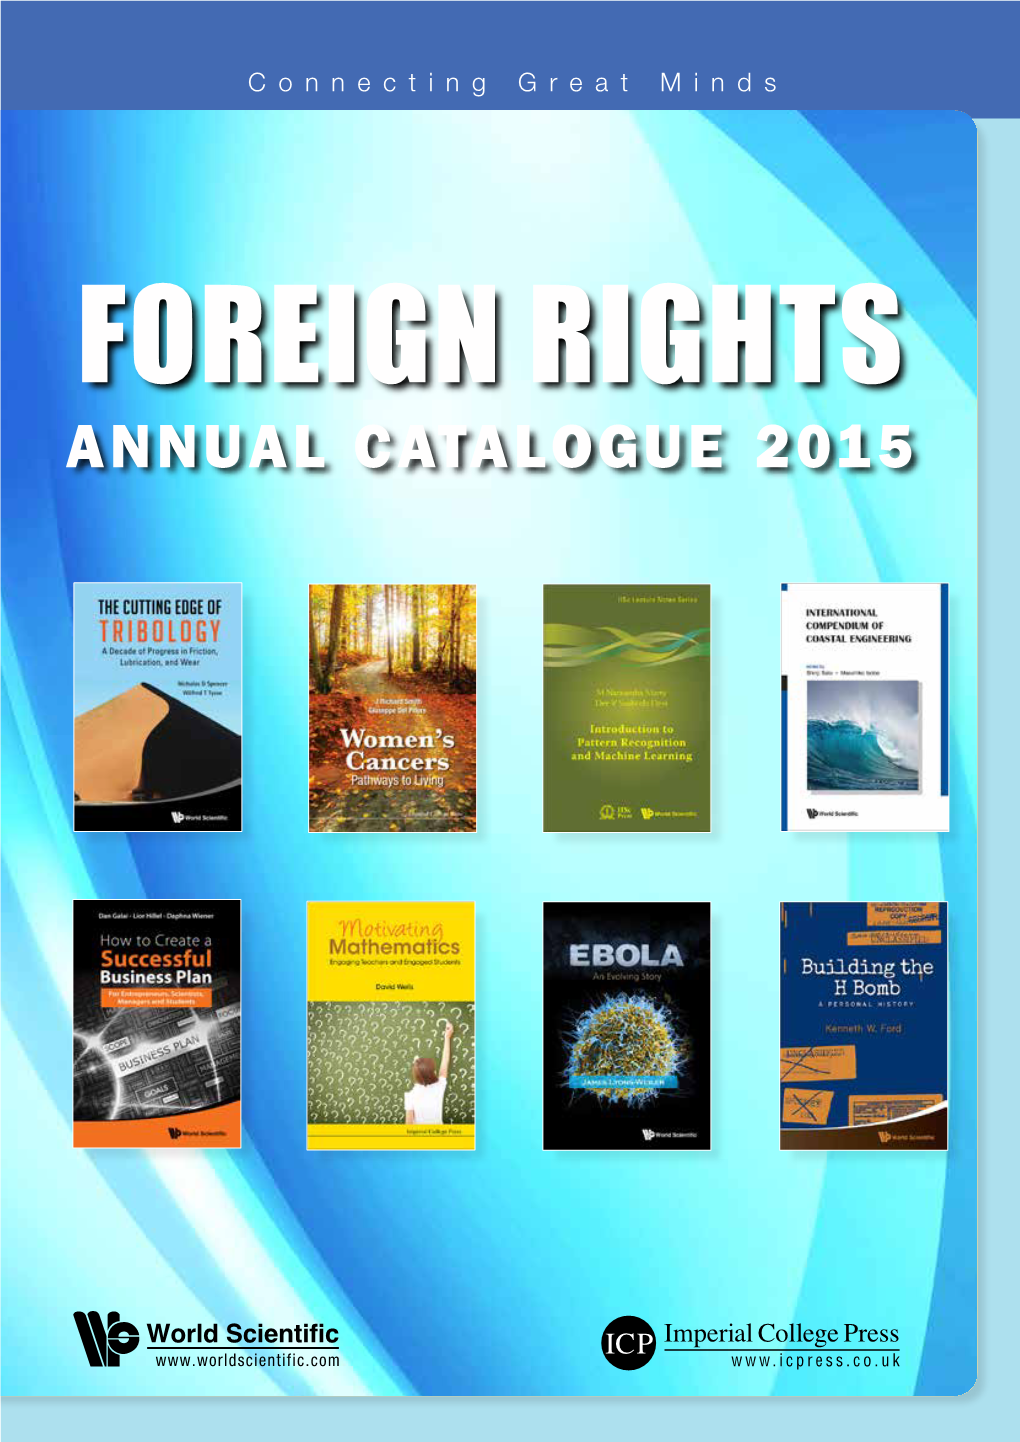 Annual Catalogue 2015